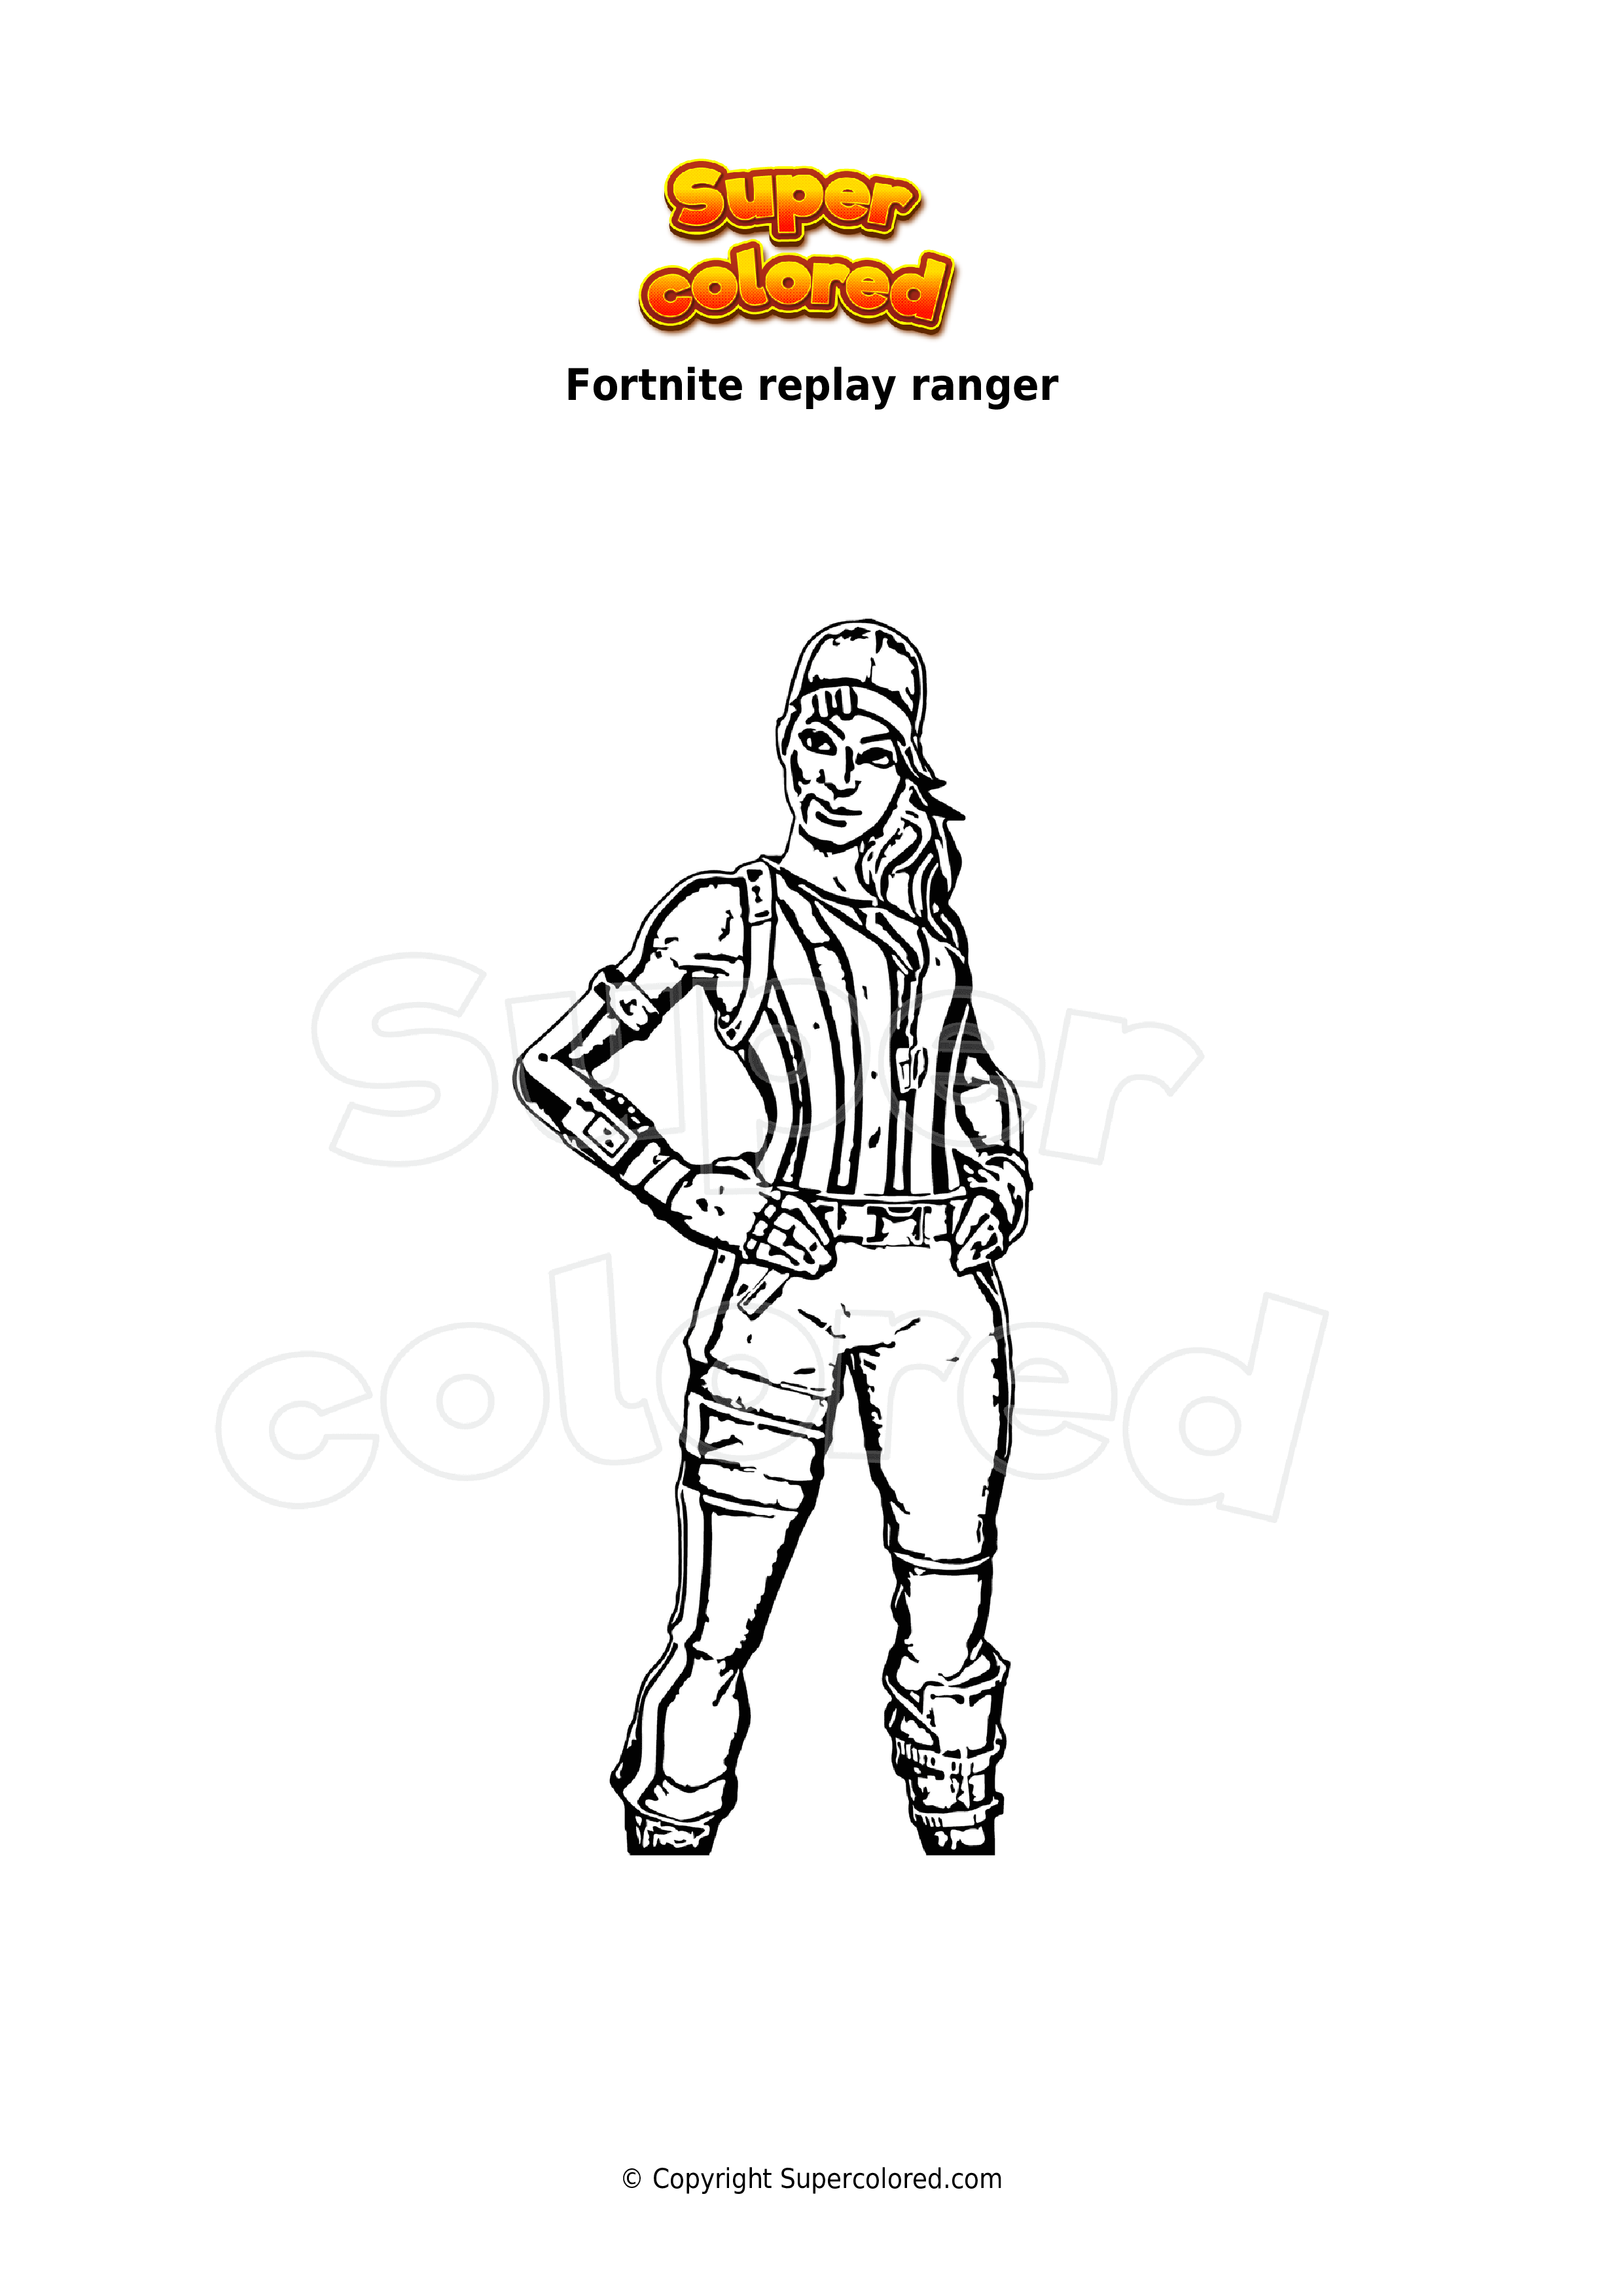 Replay Ranger Fortnite Wallpapers